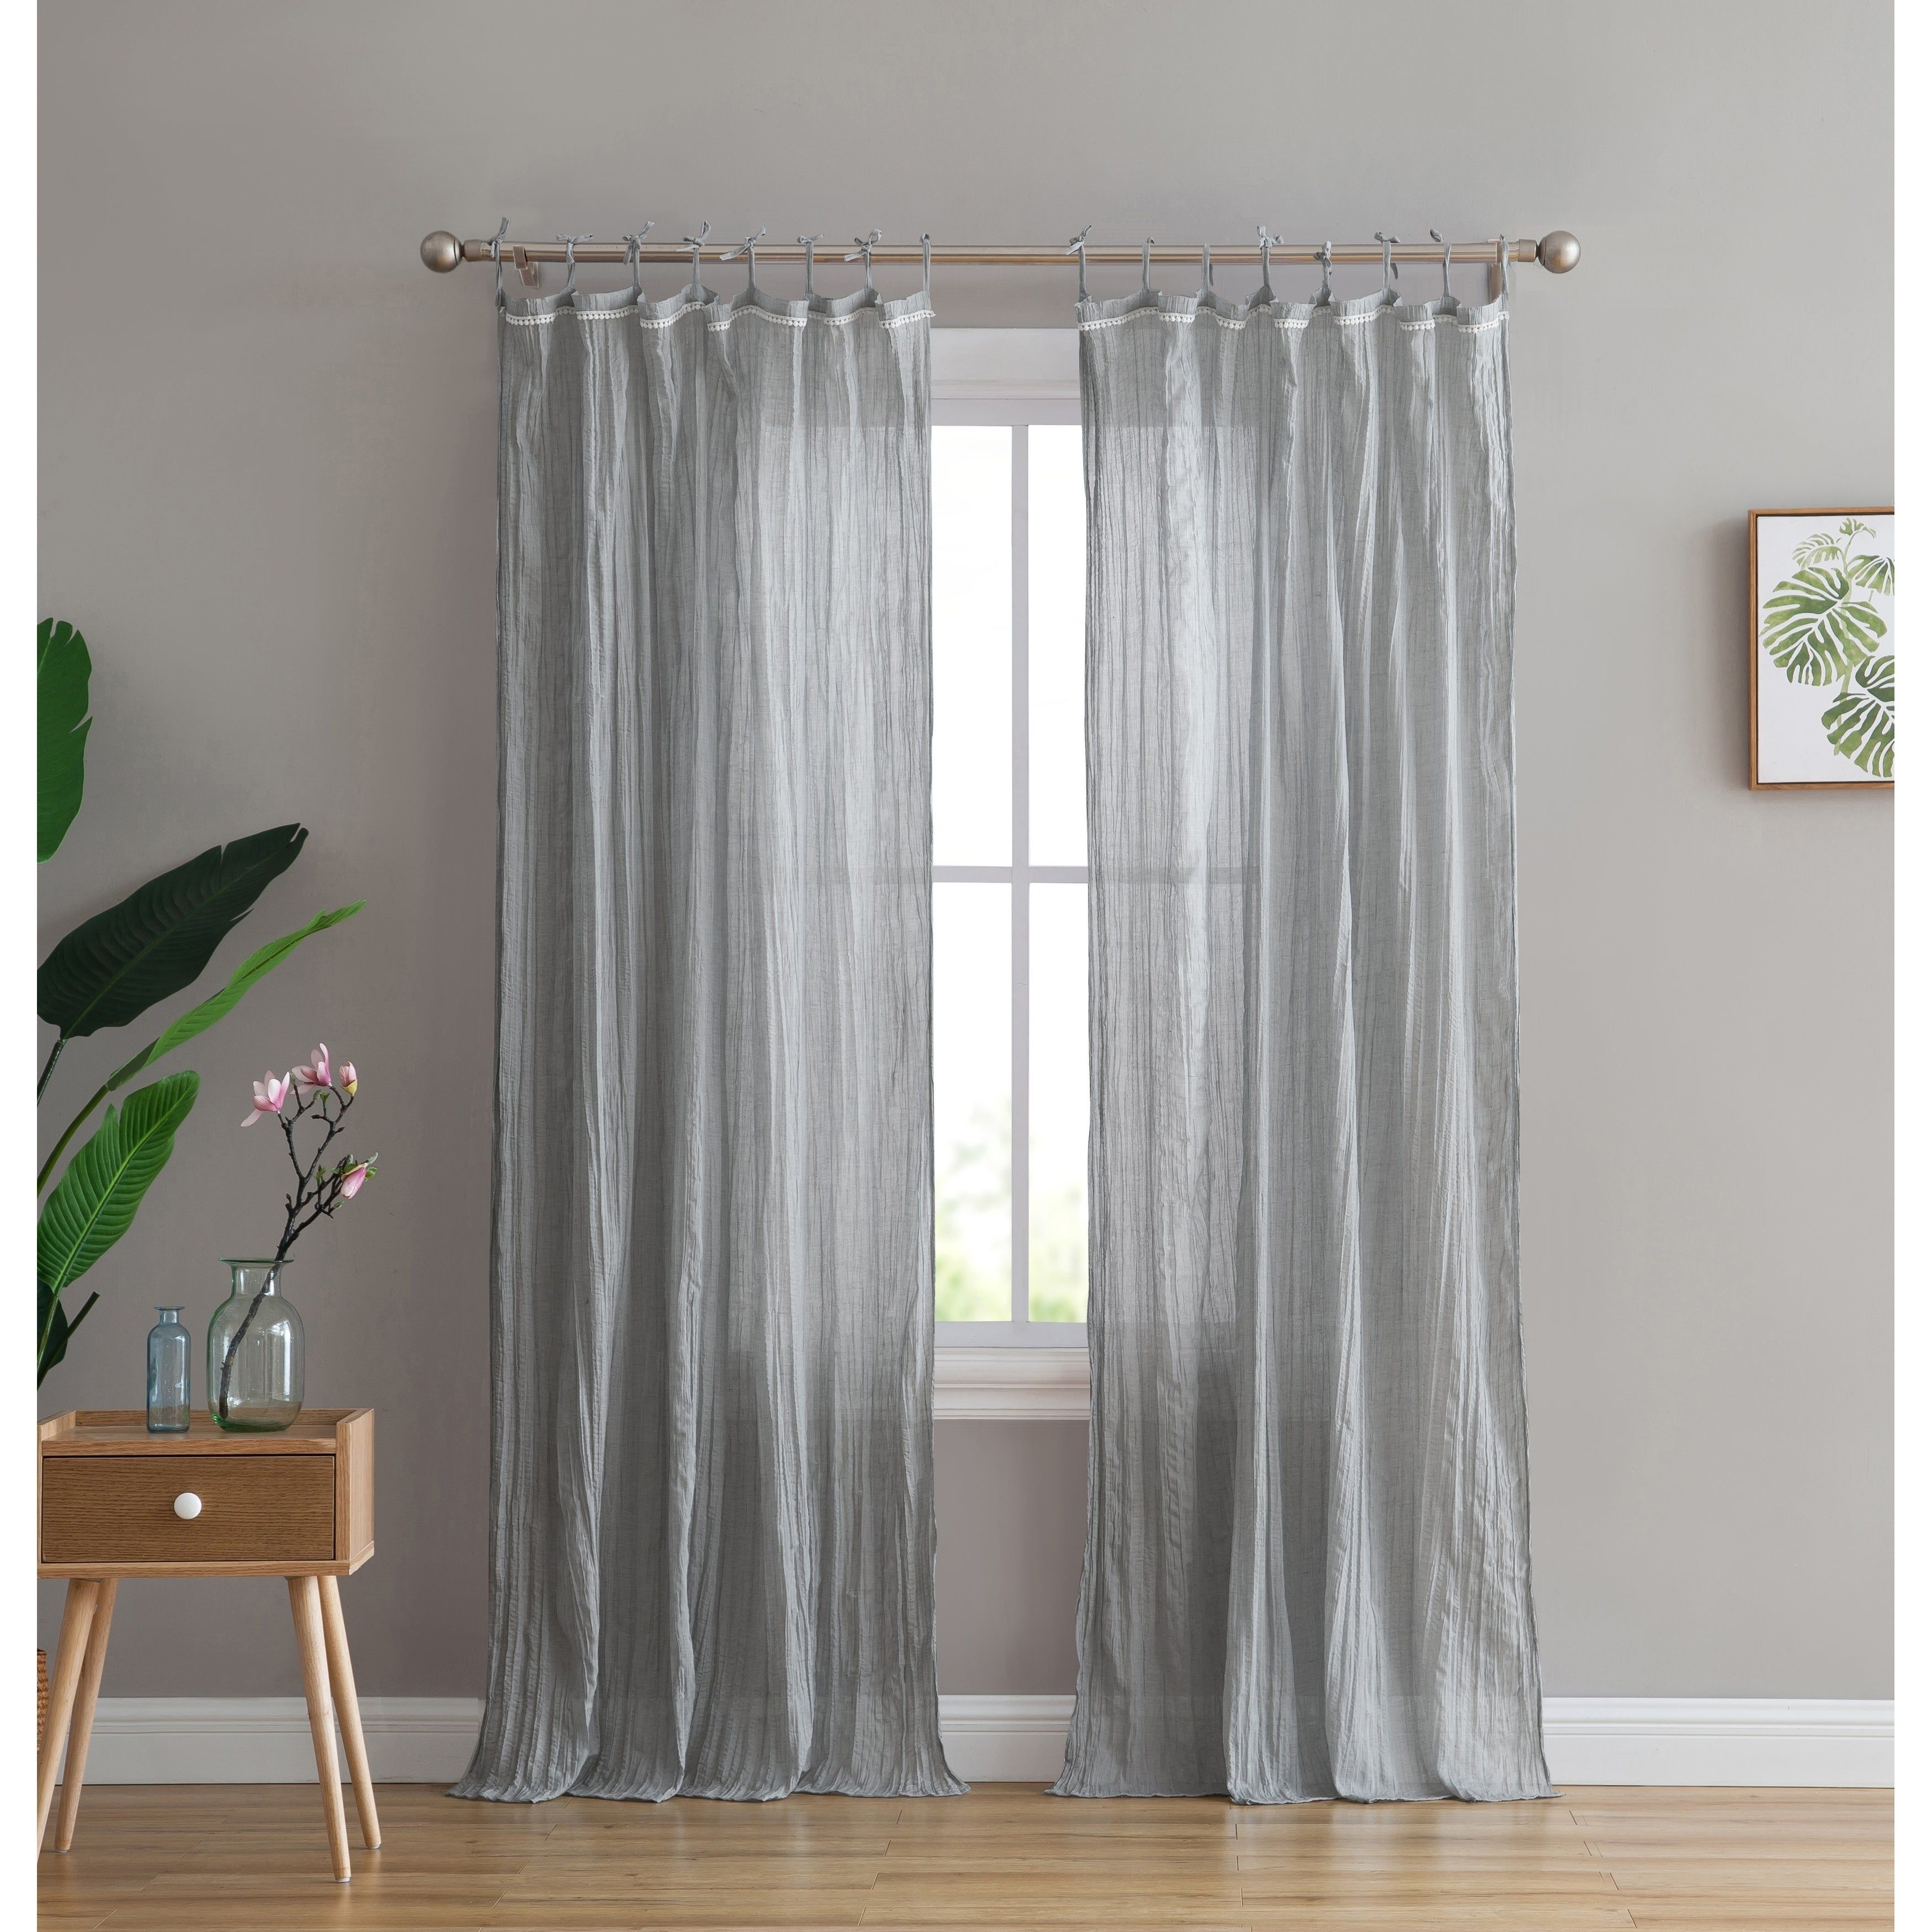 Peach & Oak Clover Tie Top Single Curtain Panel Regarding Elrene Jolie Tie Top Curtain Panels (View 17 of 20)